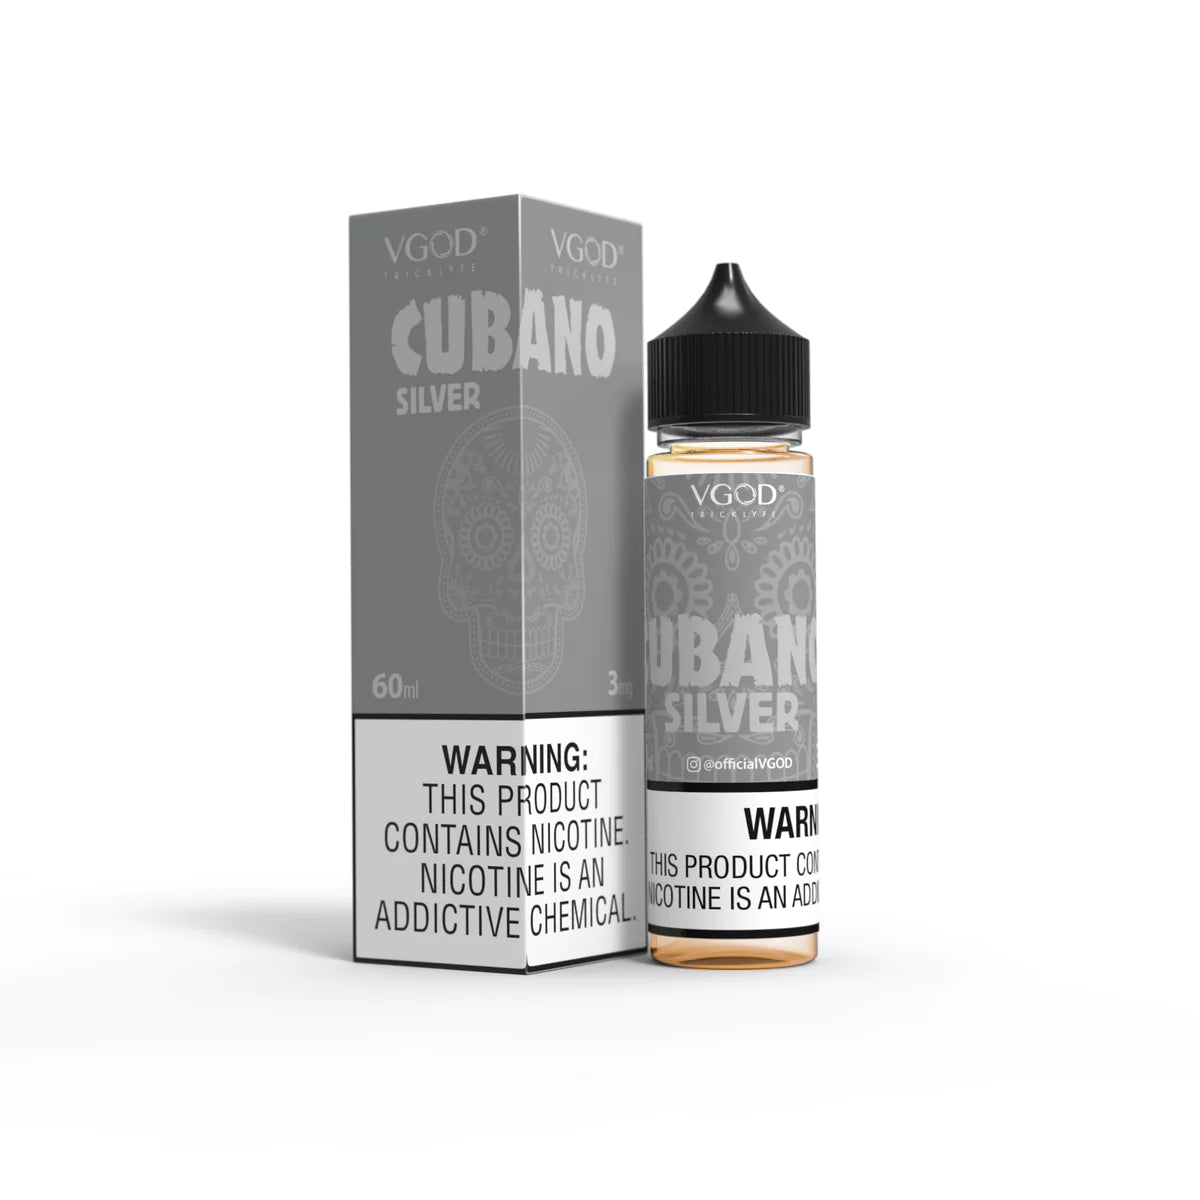 Cubano Silver by VGod | 60ML | E-Liquids | Indian Vape Ninja Indian Vape Ninja